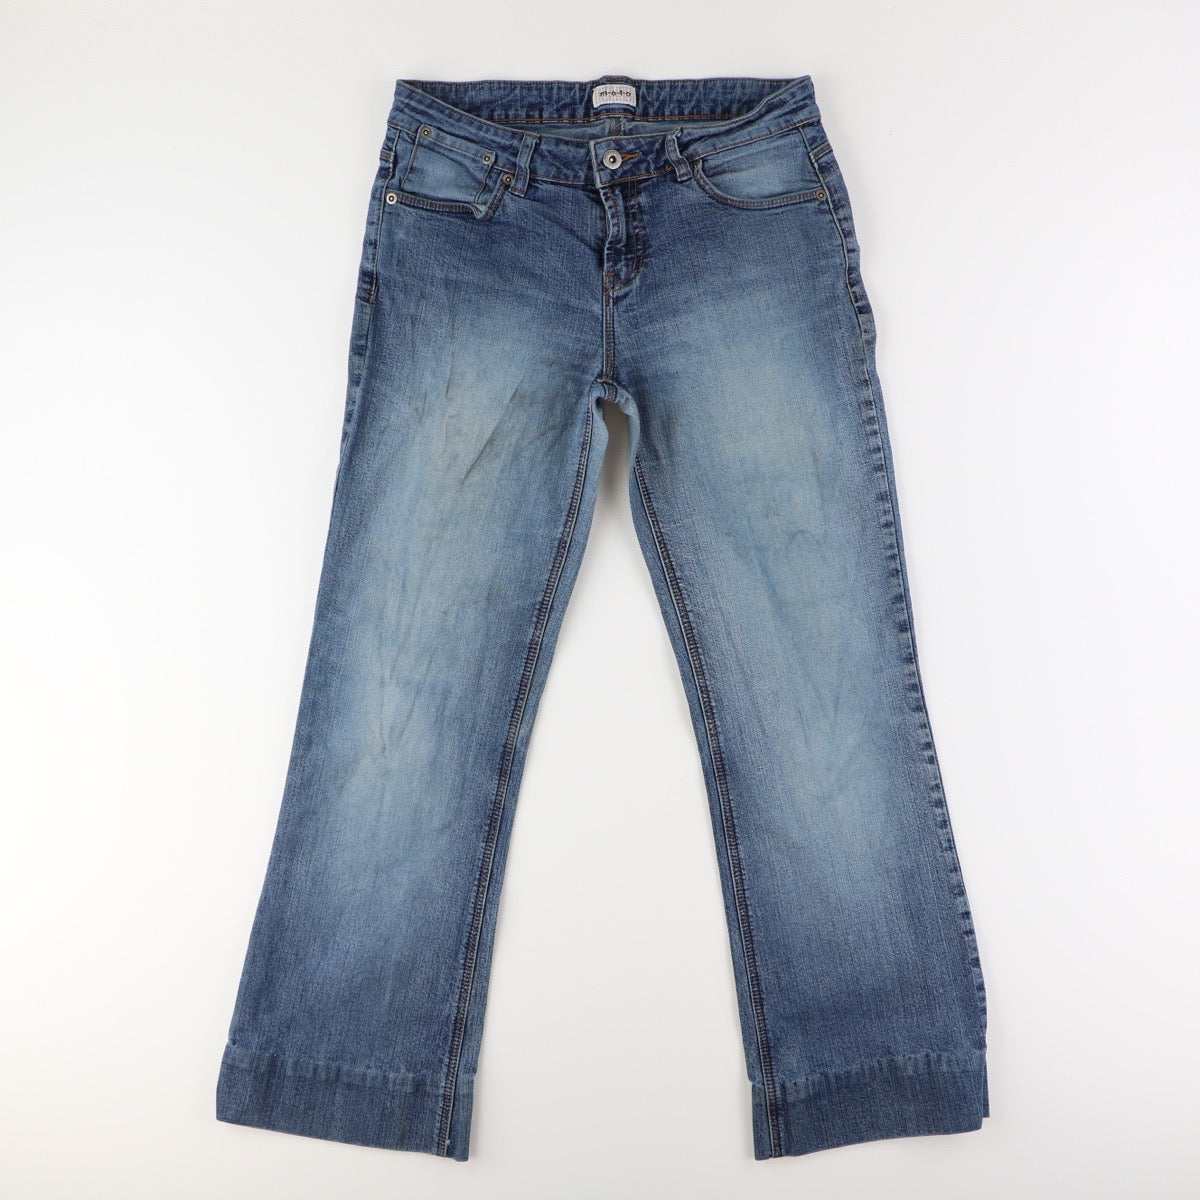 Vintage Jeans (30)